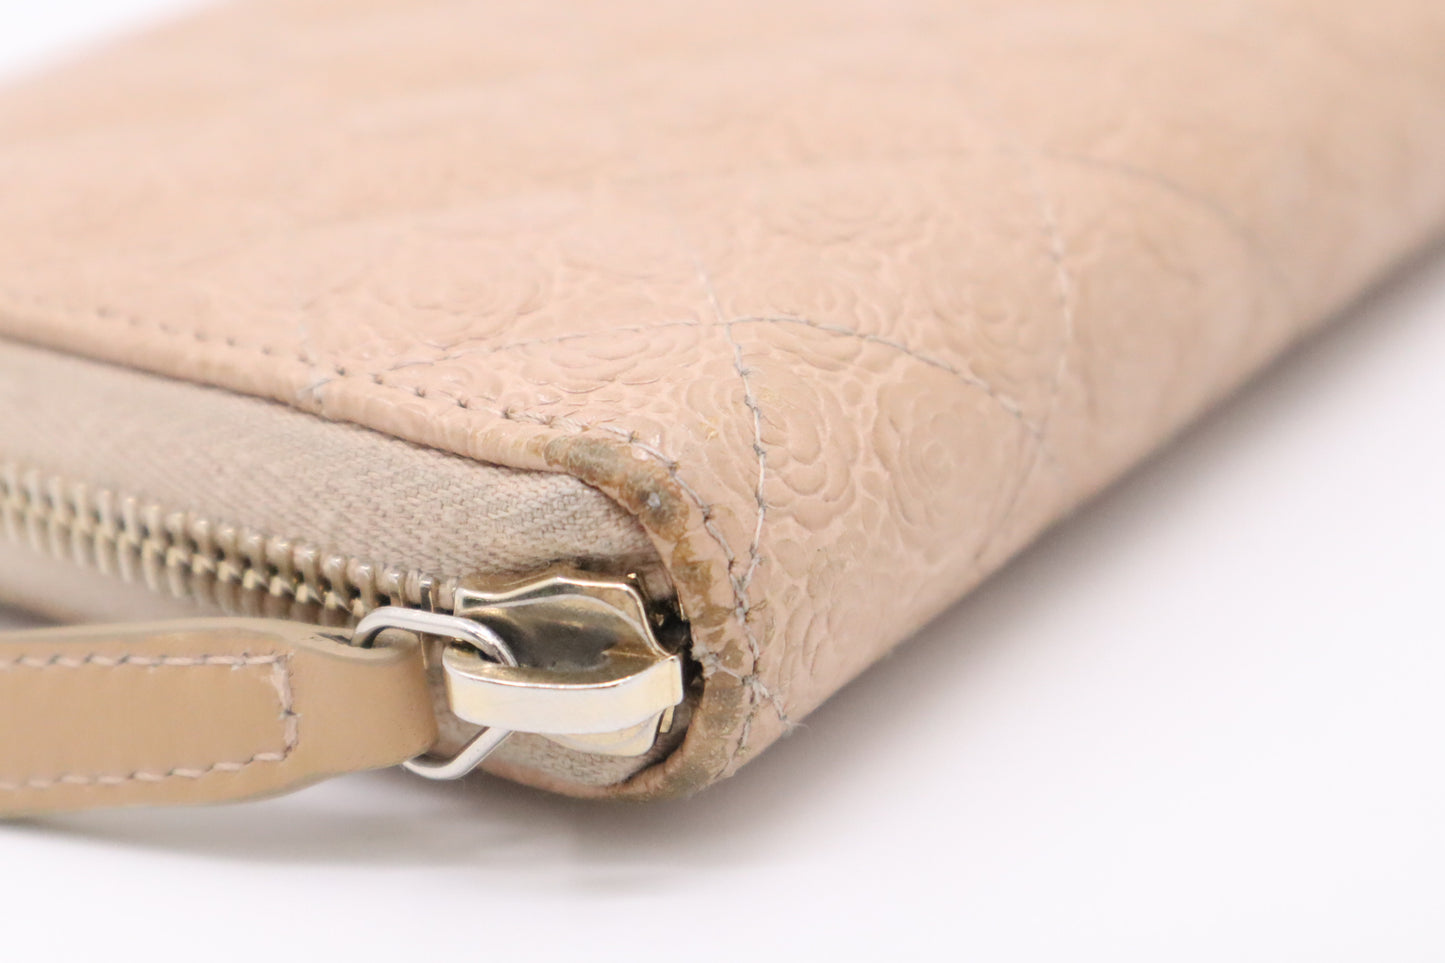 Chanel Long Zippy Wallet in Beige Camelia Matelassé Leather